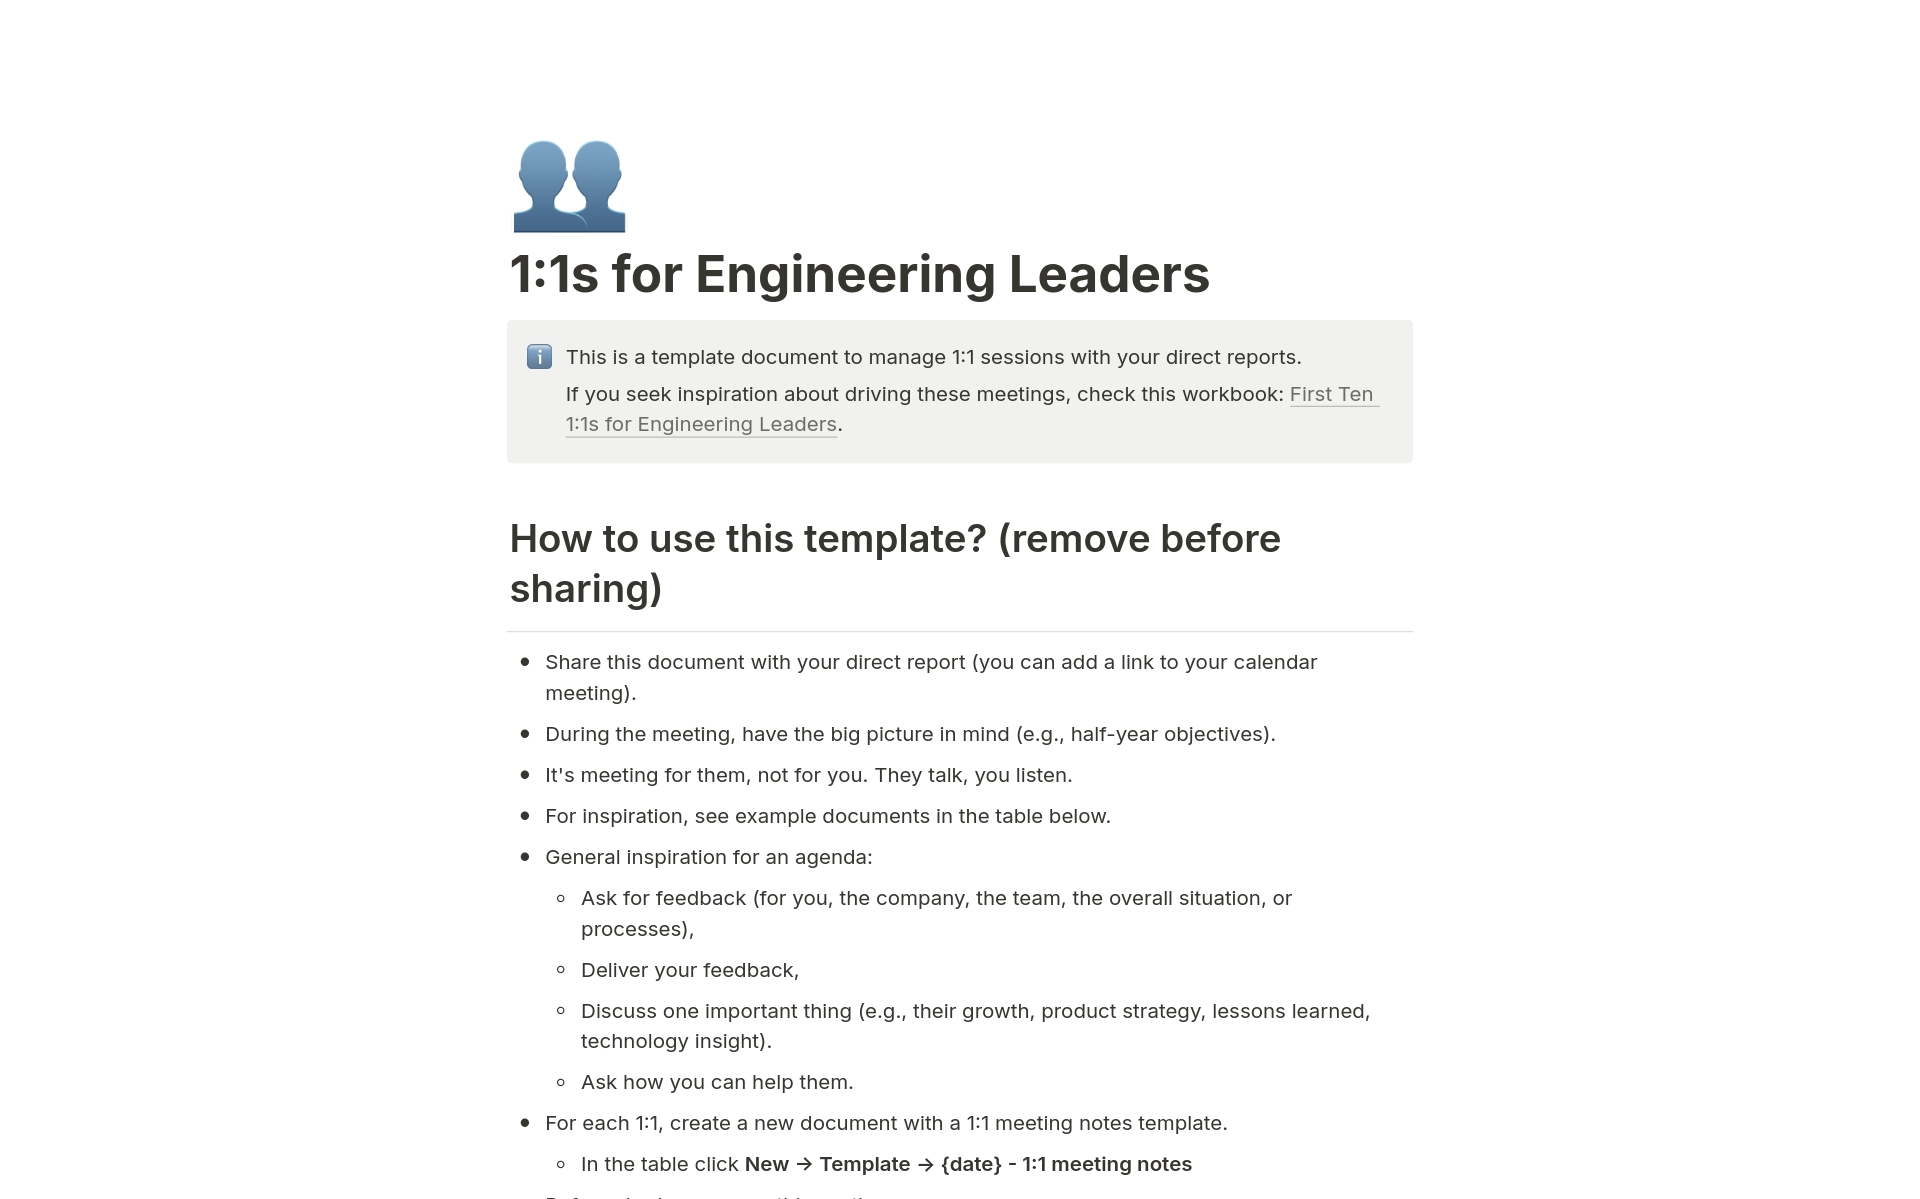 Aperçu du modèle de 1:1s for Engineering Leaders